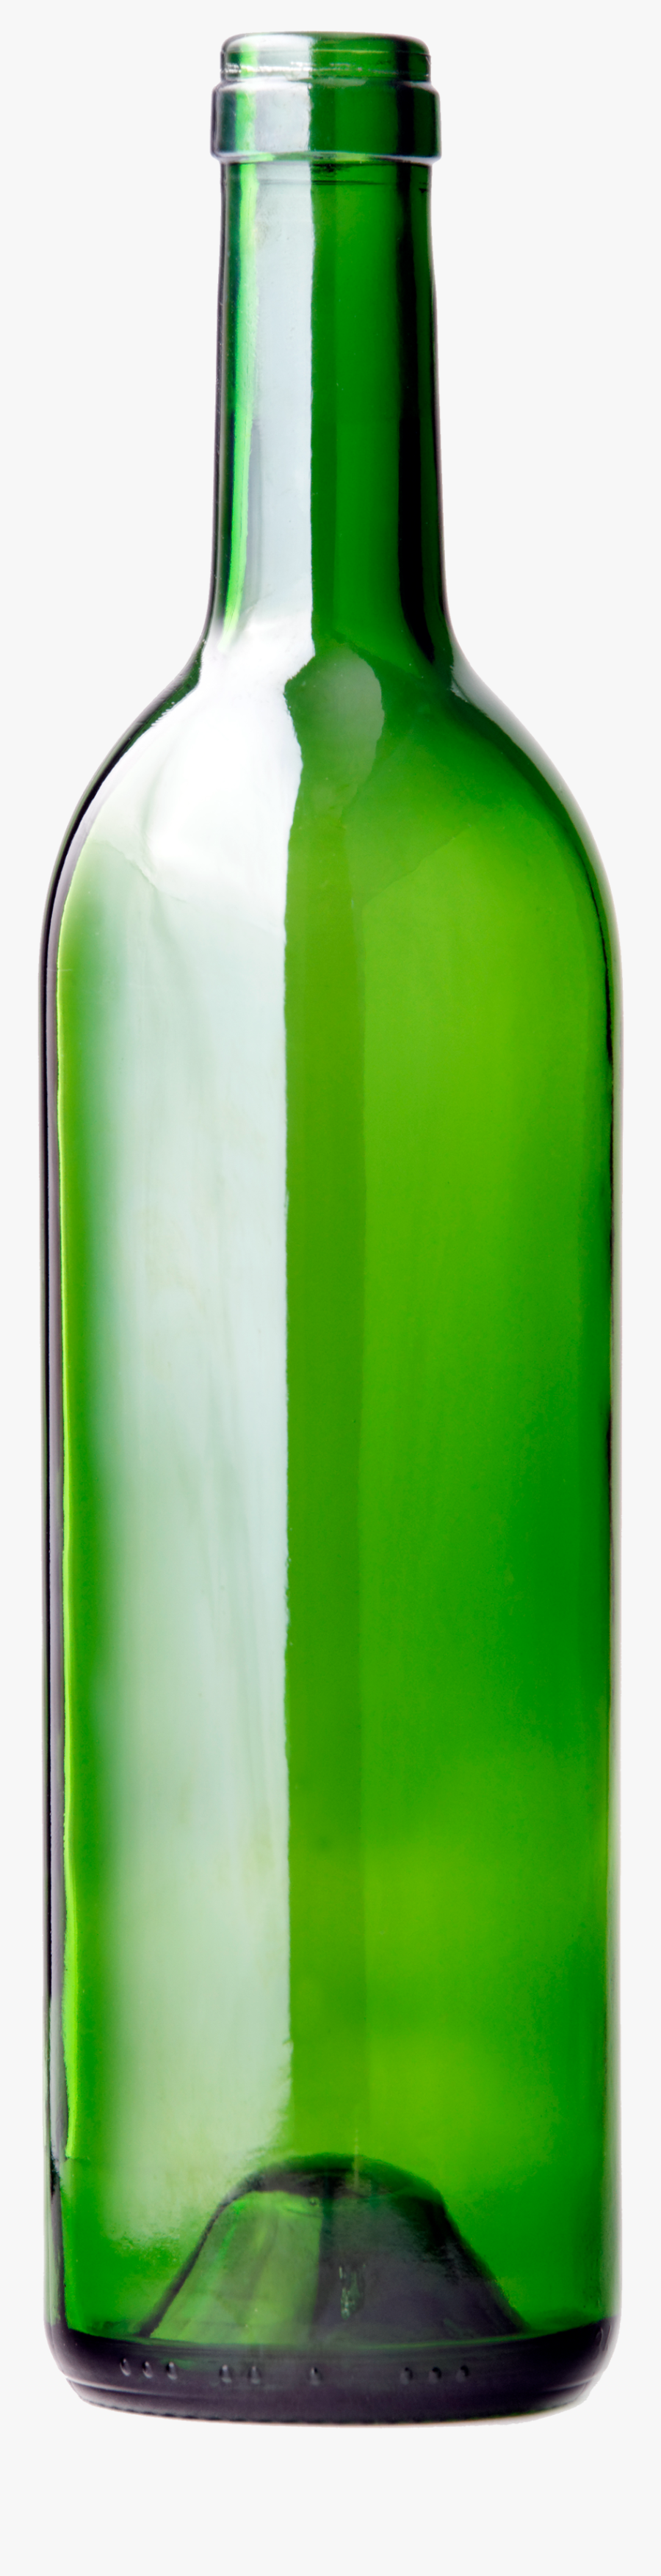 Bottle Long Green - Bottle Png, Transparent Clipart